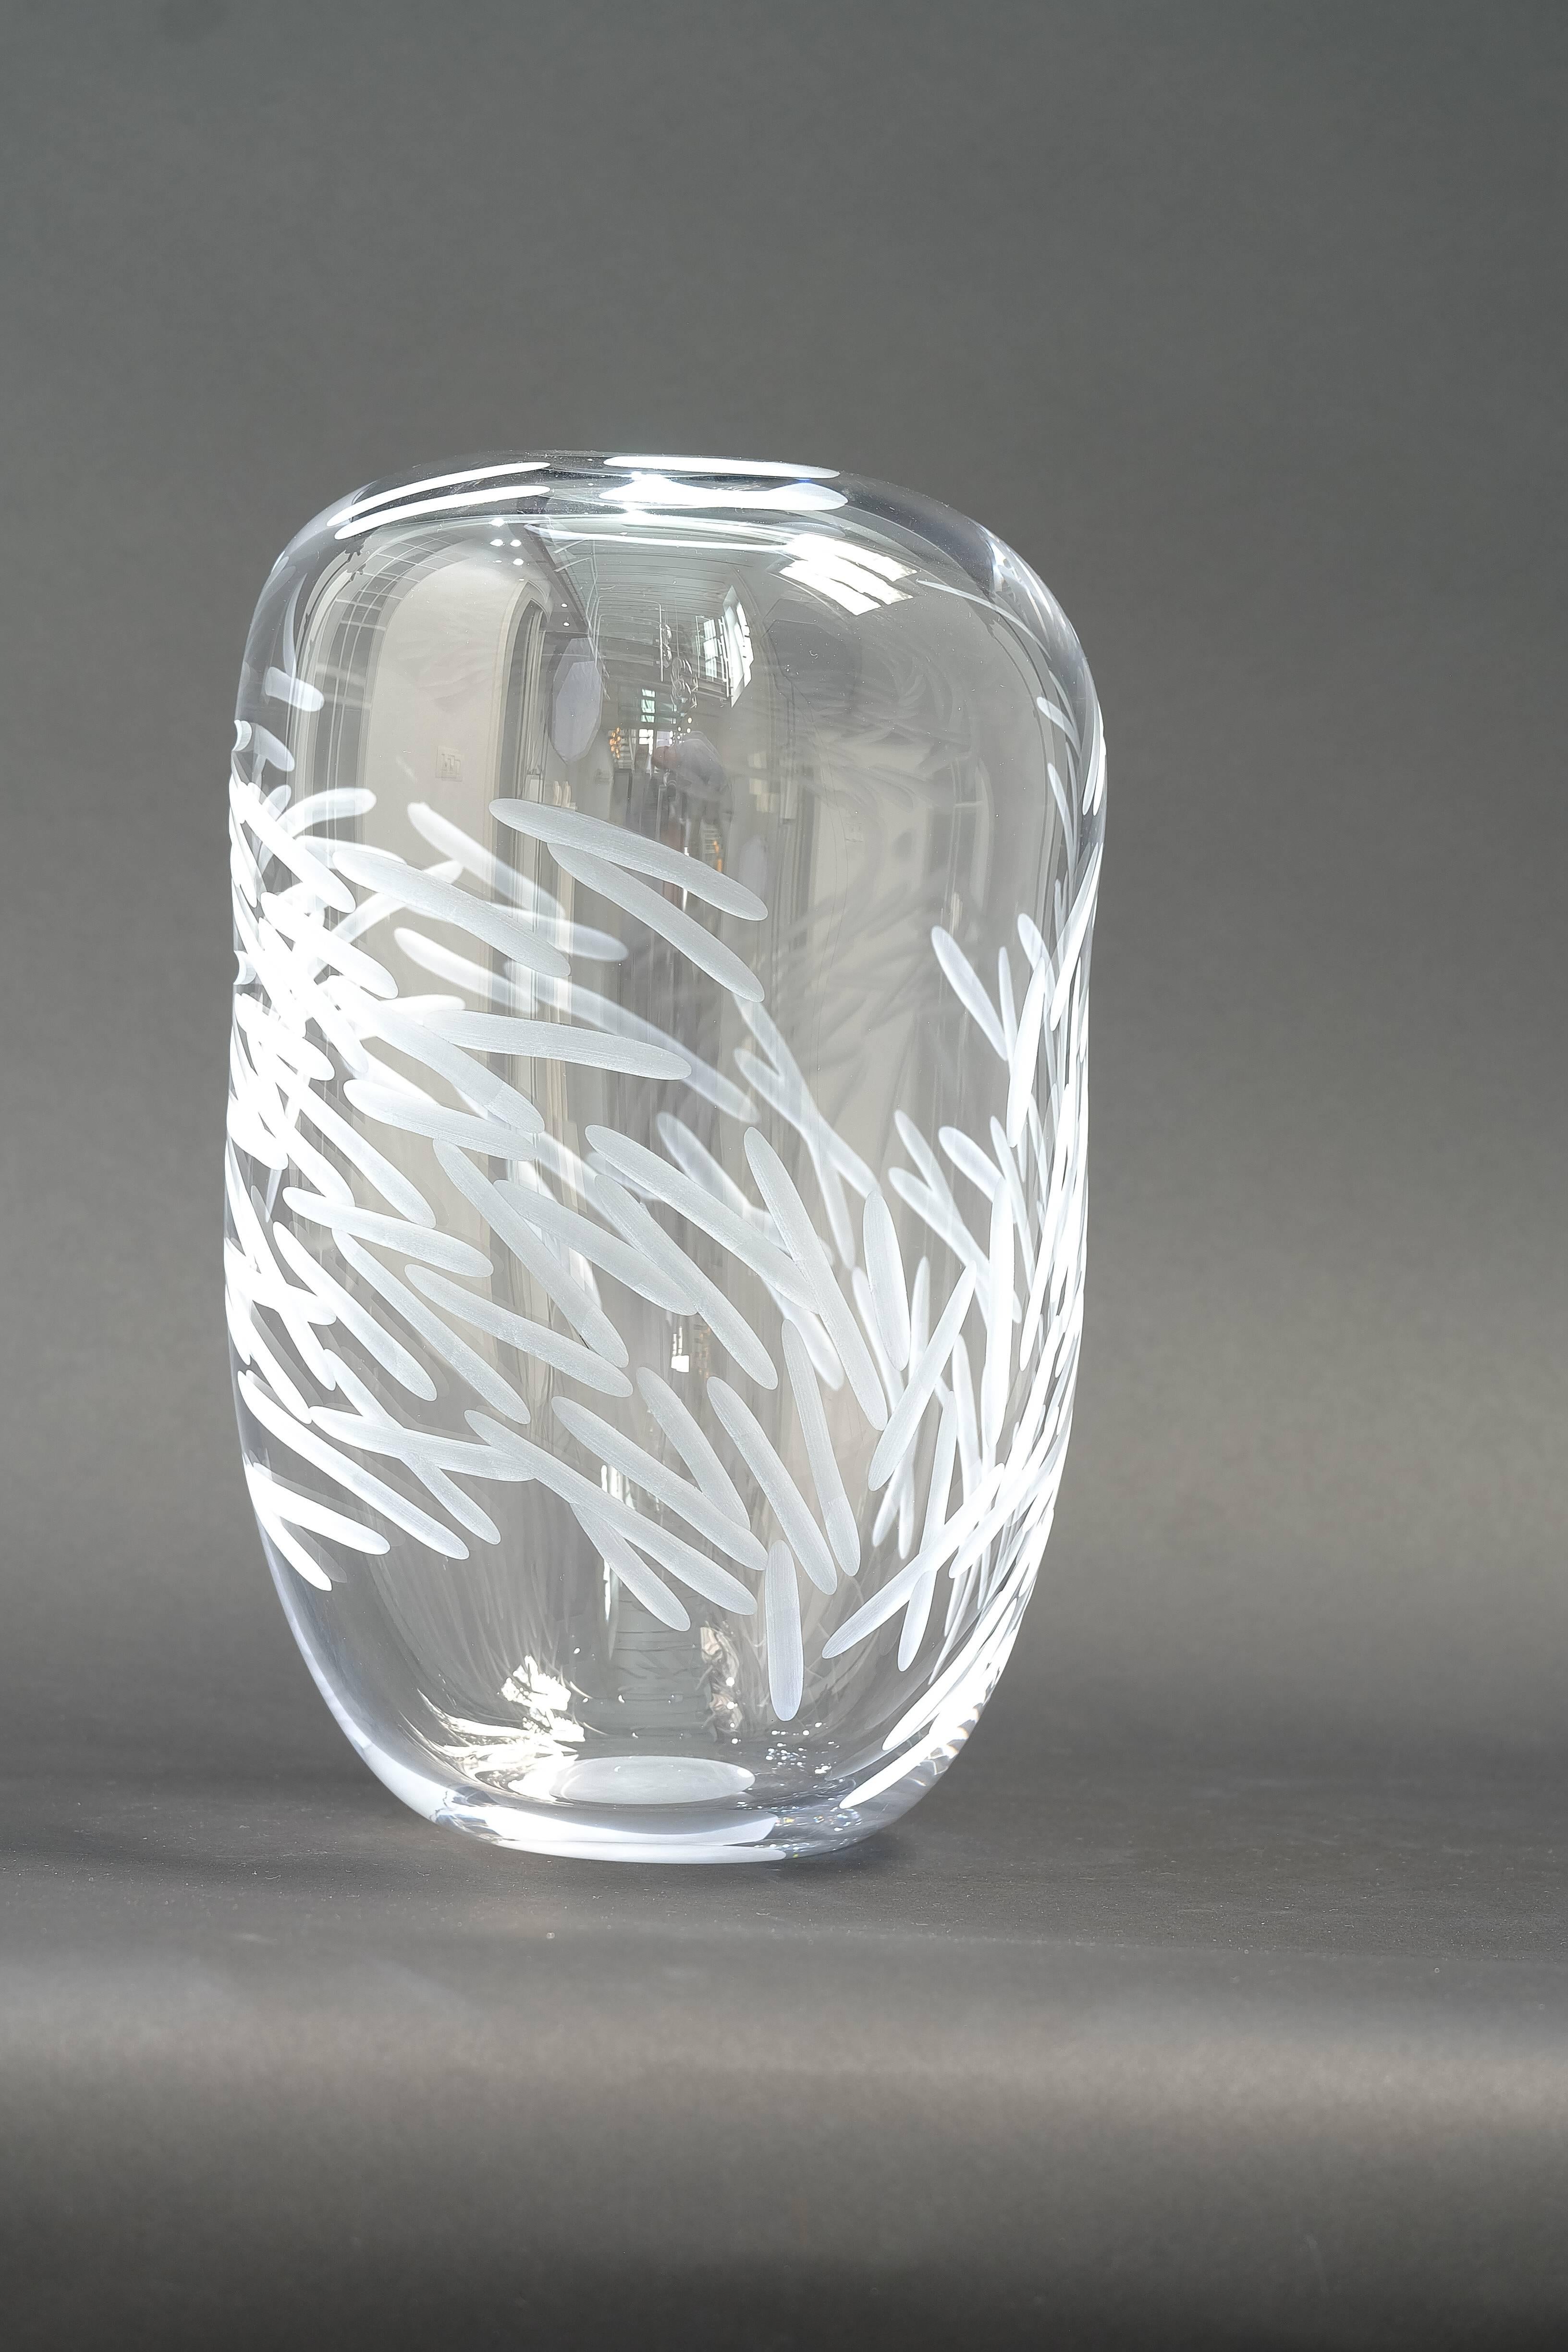 Untitled glass vase - Art by Vezzini & Chen